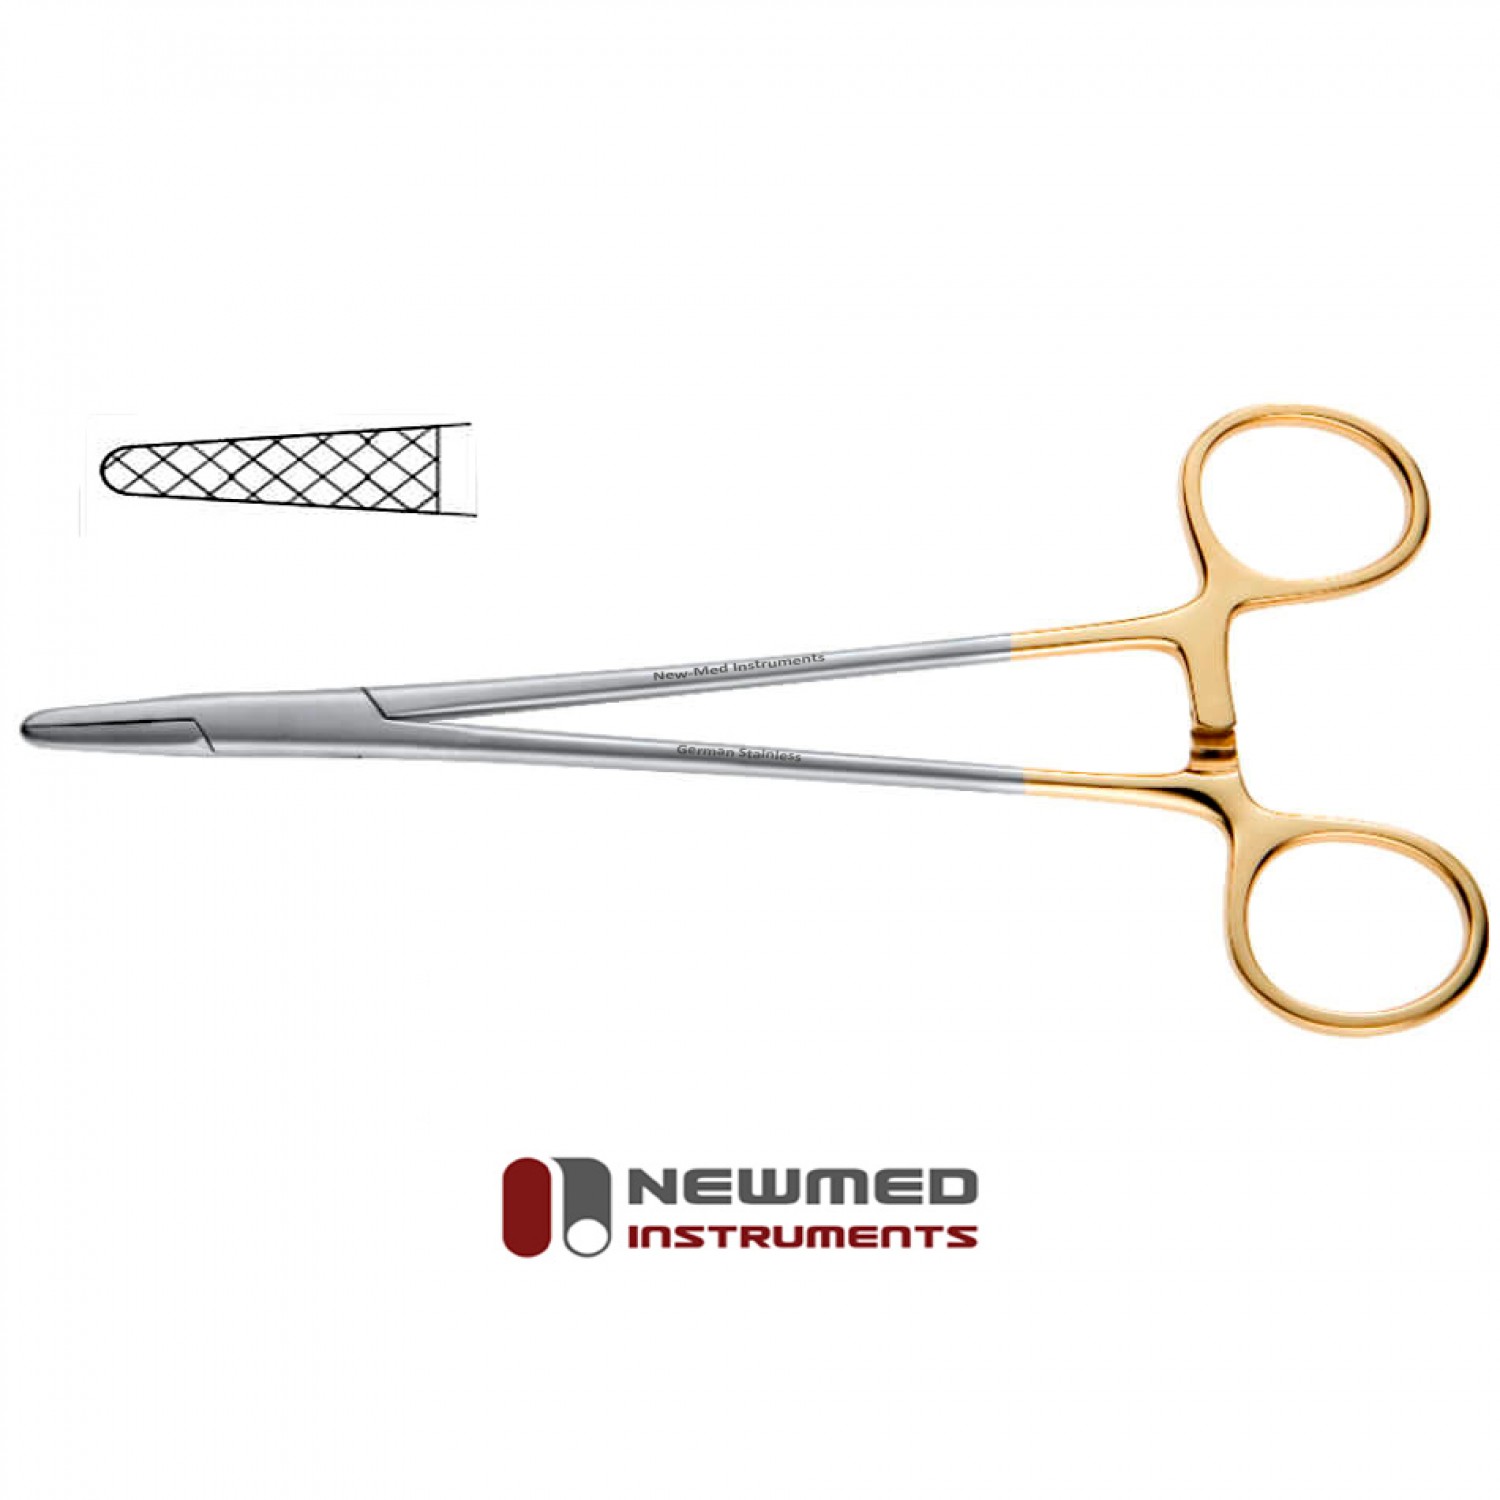 Surgical Design Premier Mayo Hegar Needle Holder:Dissection